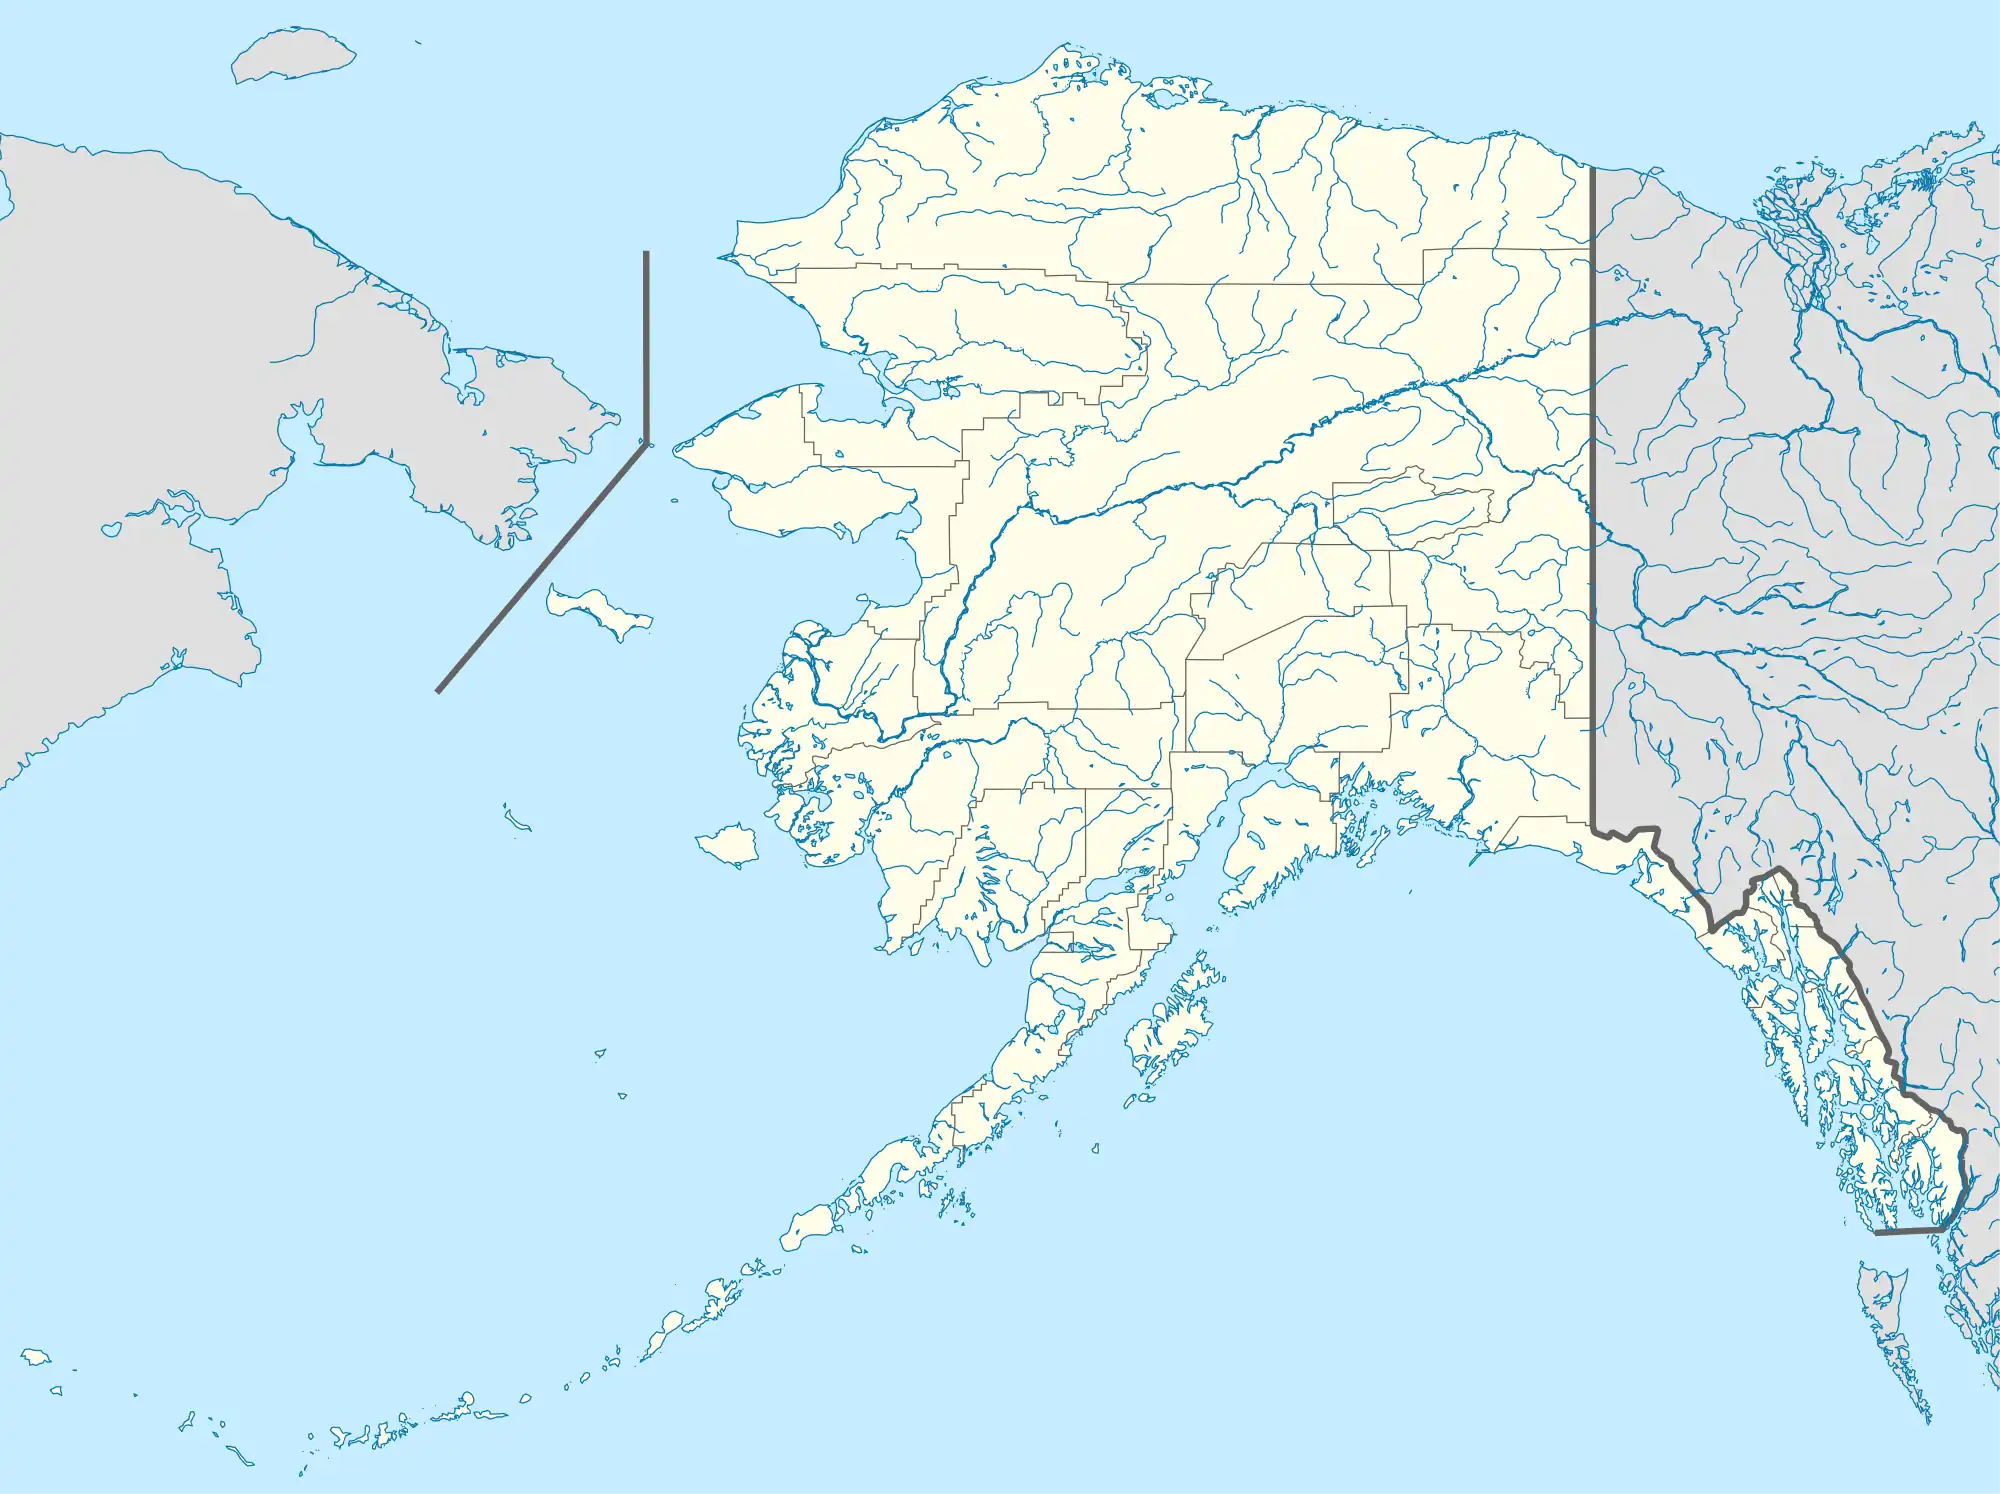 Buldir Island is located in Alaska